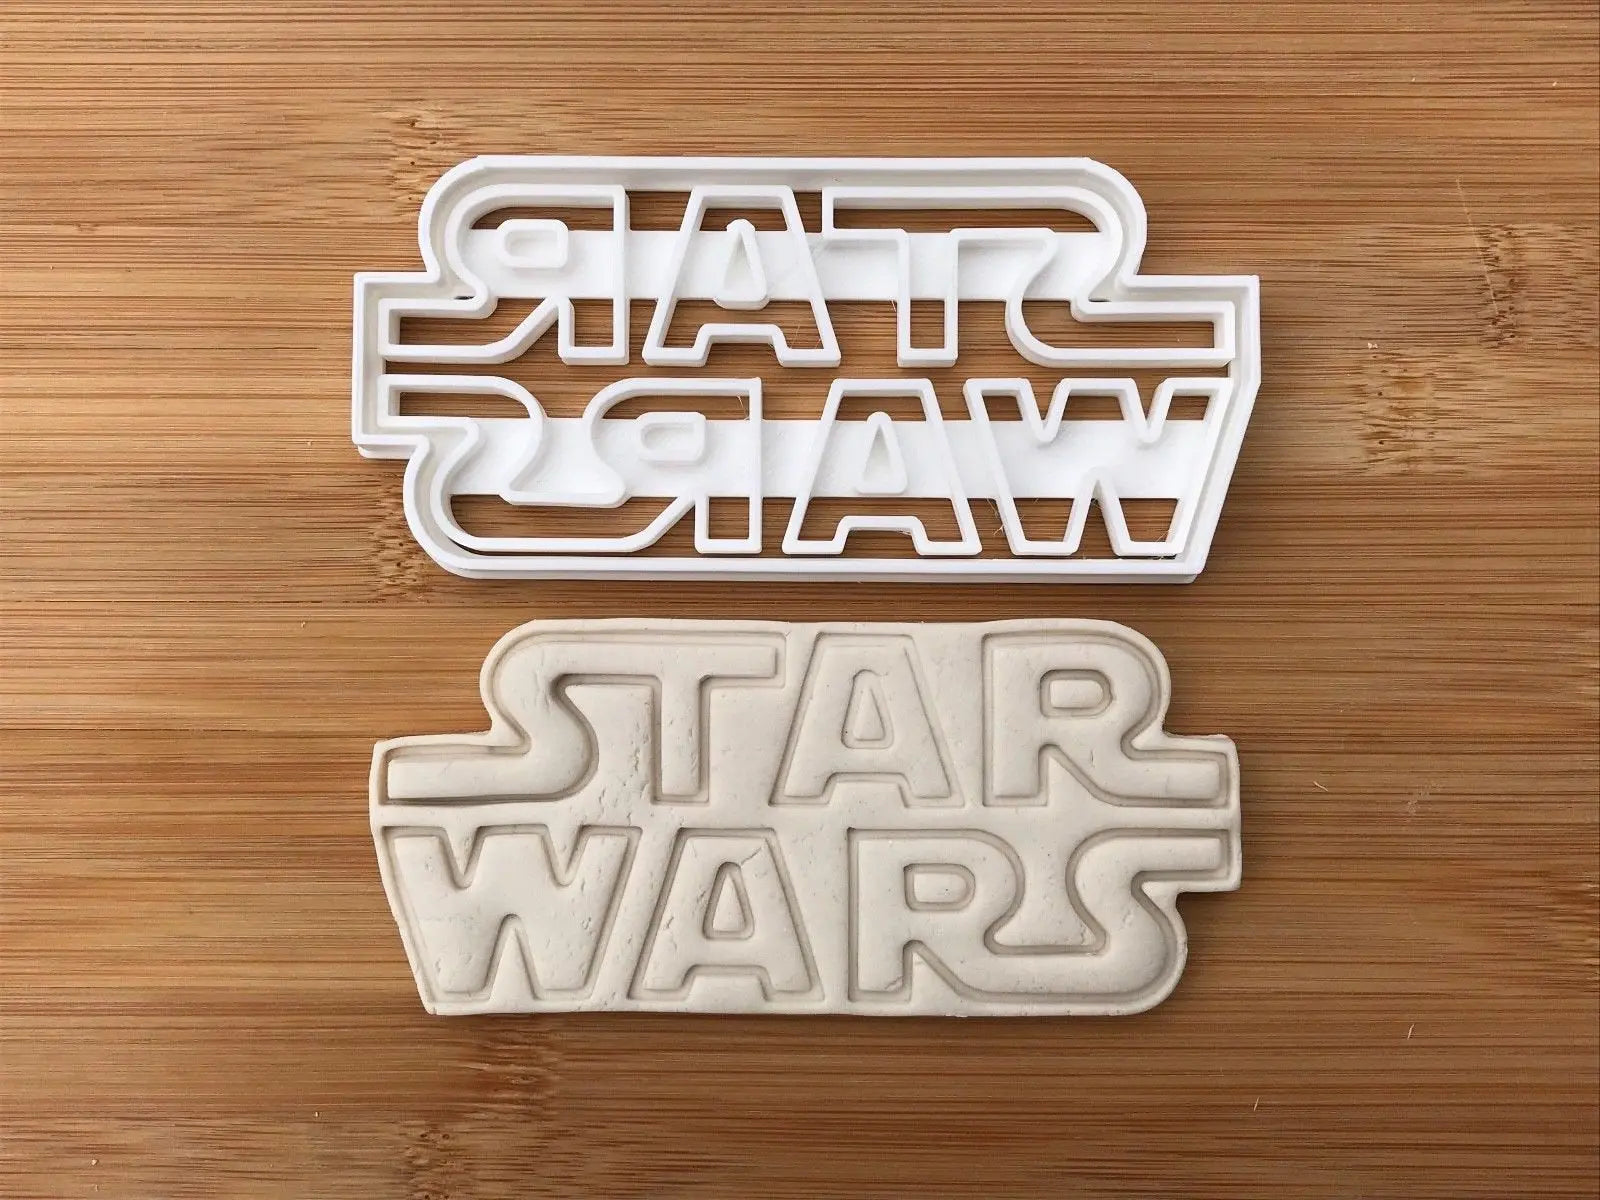 Star Wars-INSPIRED Logo Medium Uk Seller Biscuit Cookie Cutter Fondant Cake Decorating MEG cookie cutters